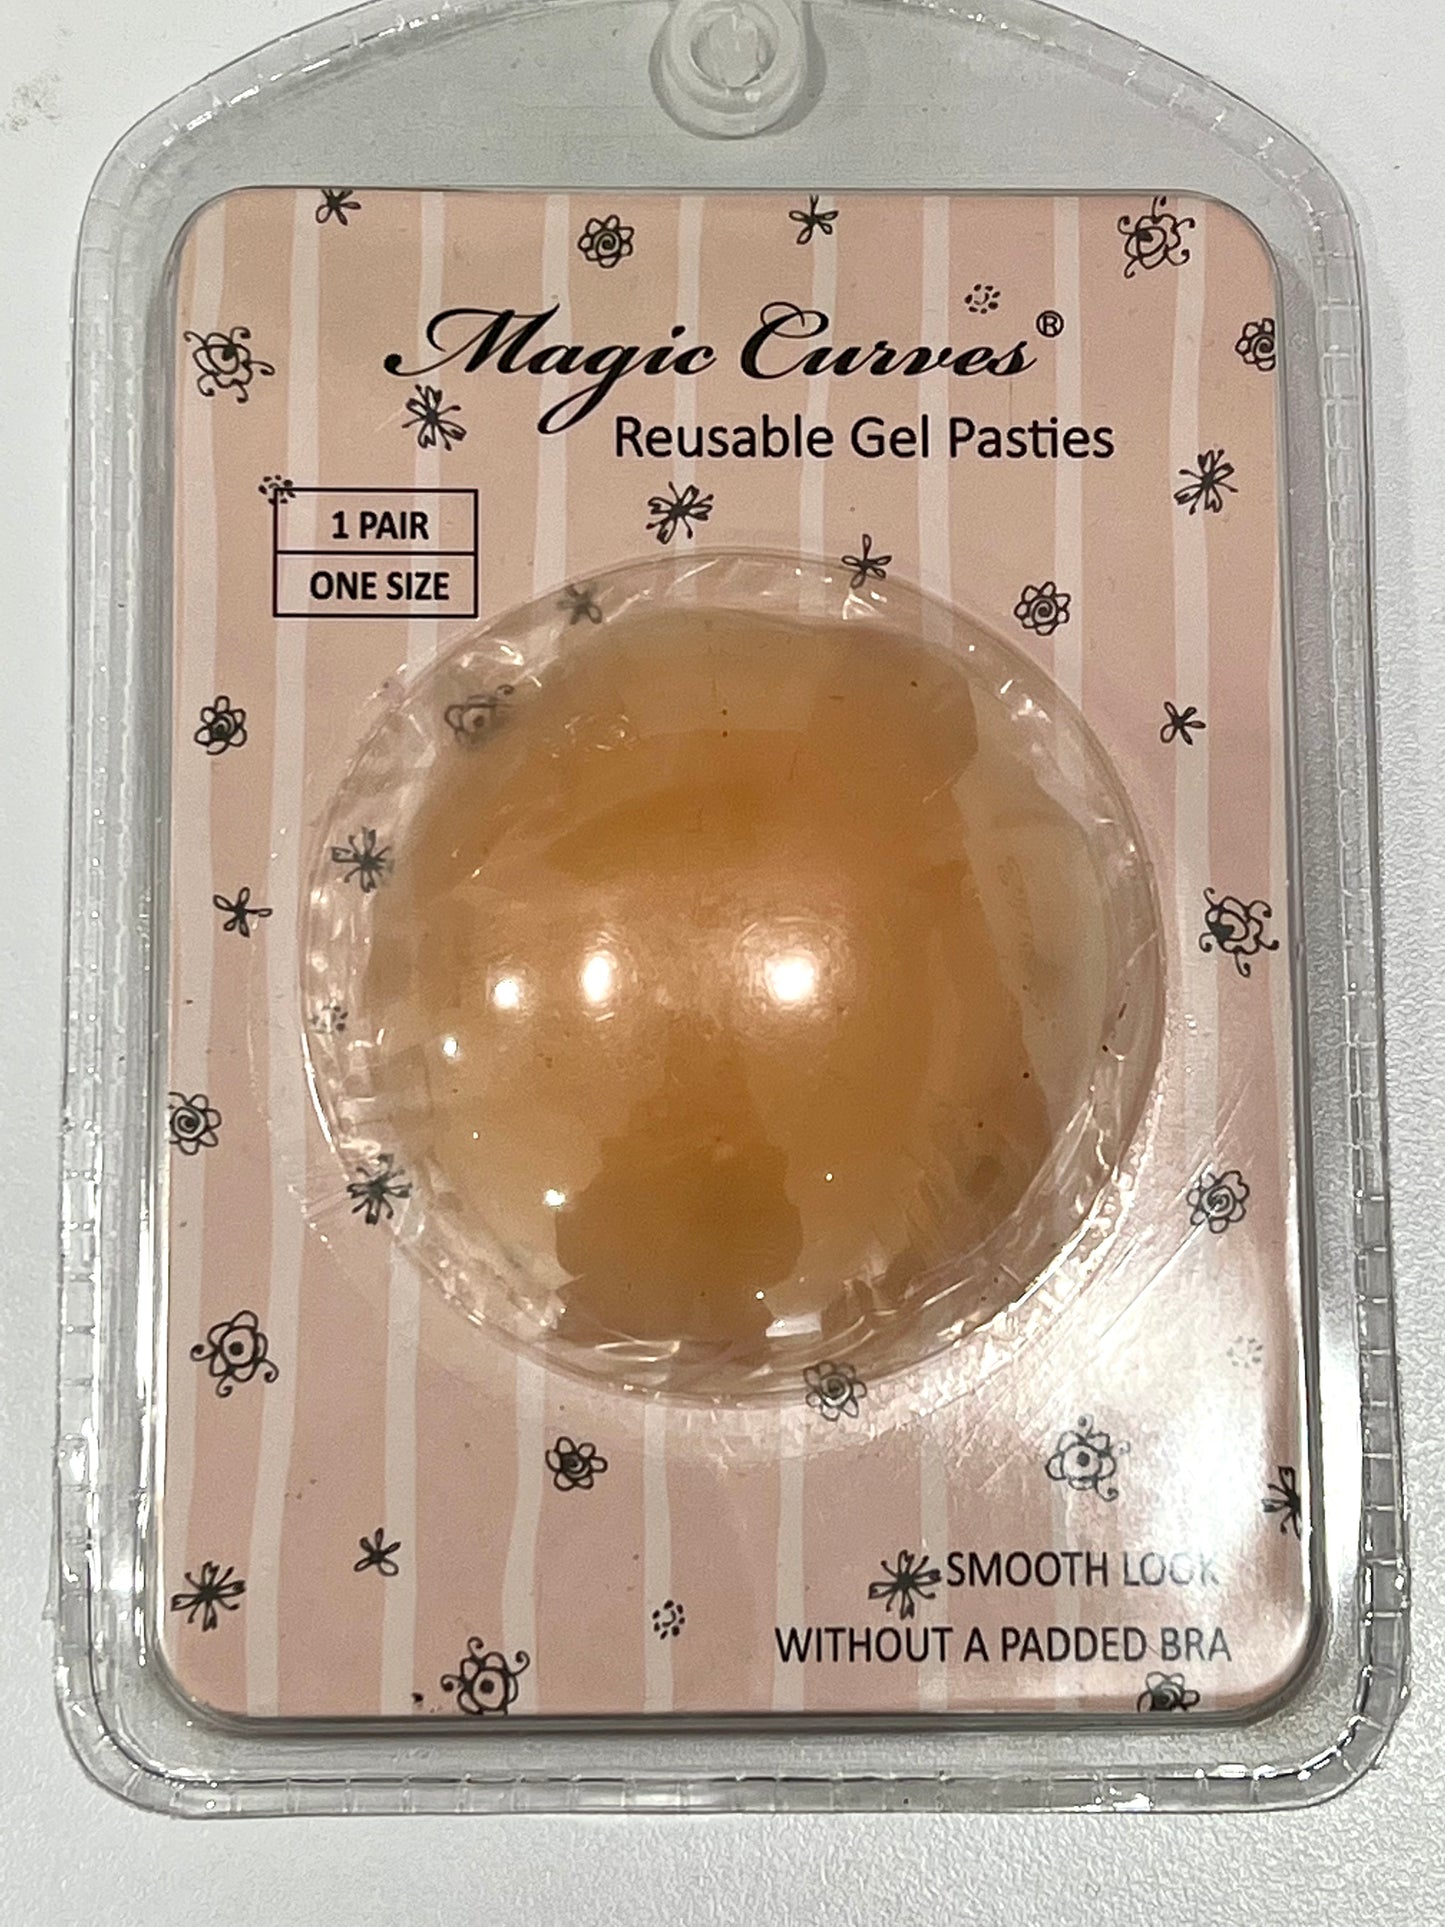 Magic Curves Reusable Gel Pasties